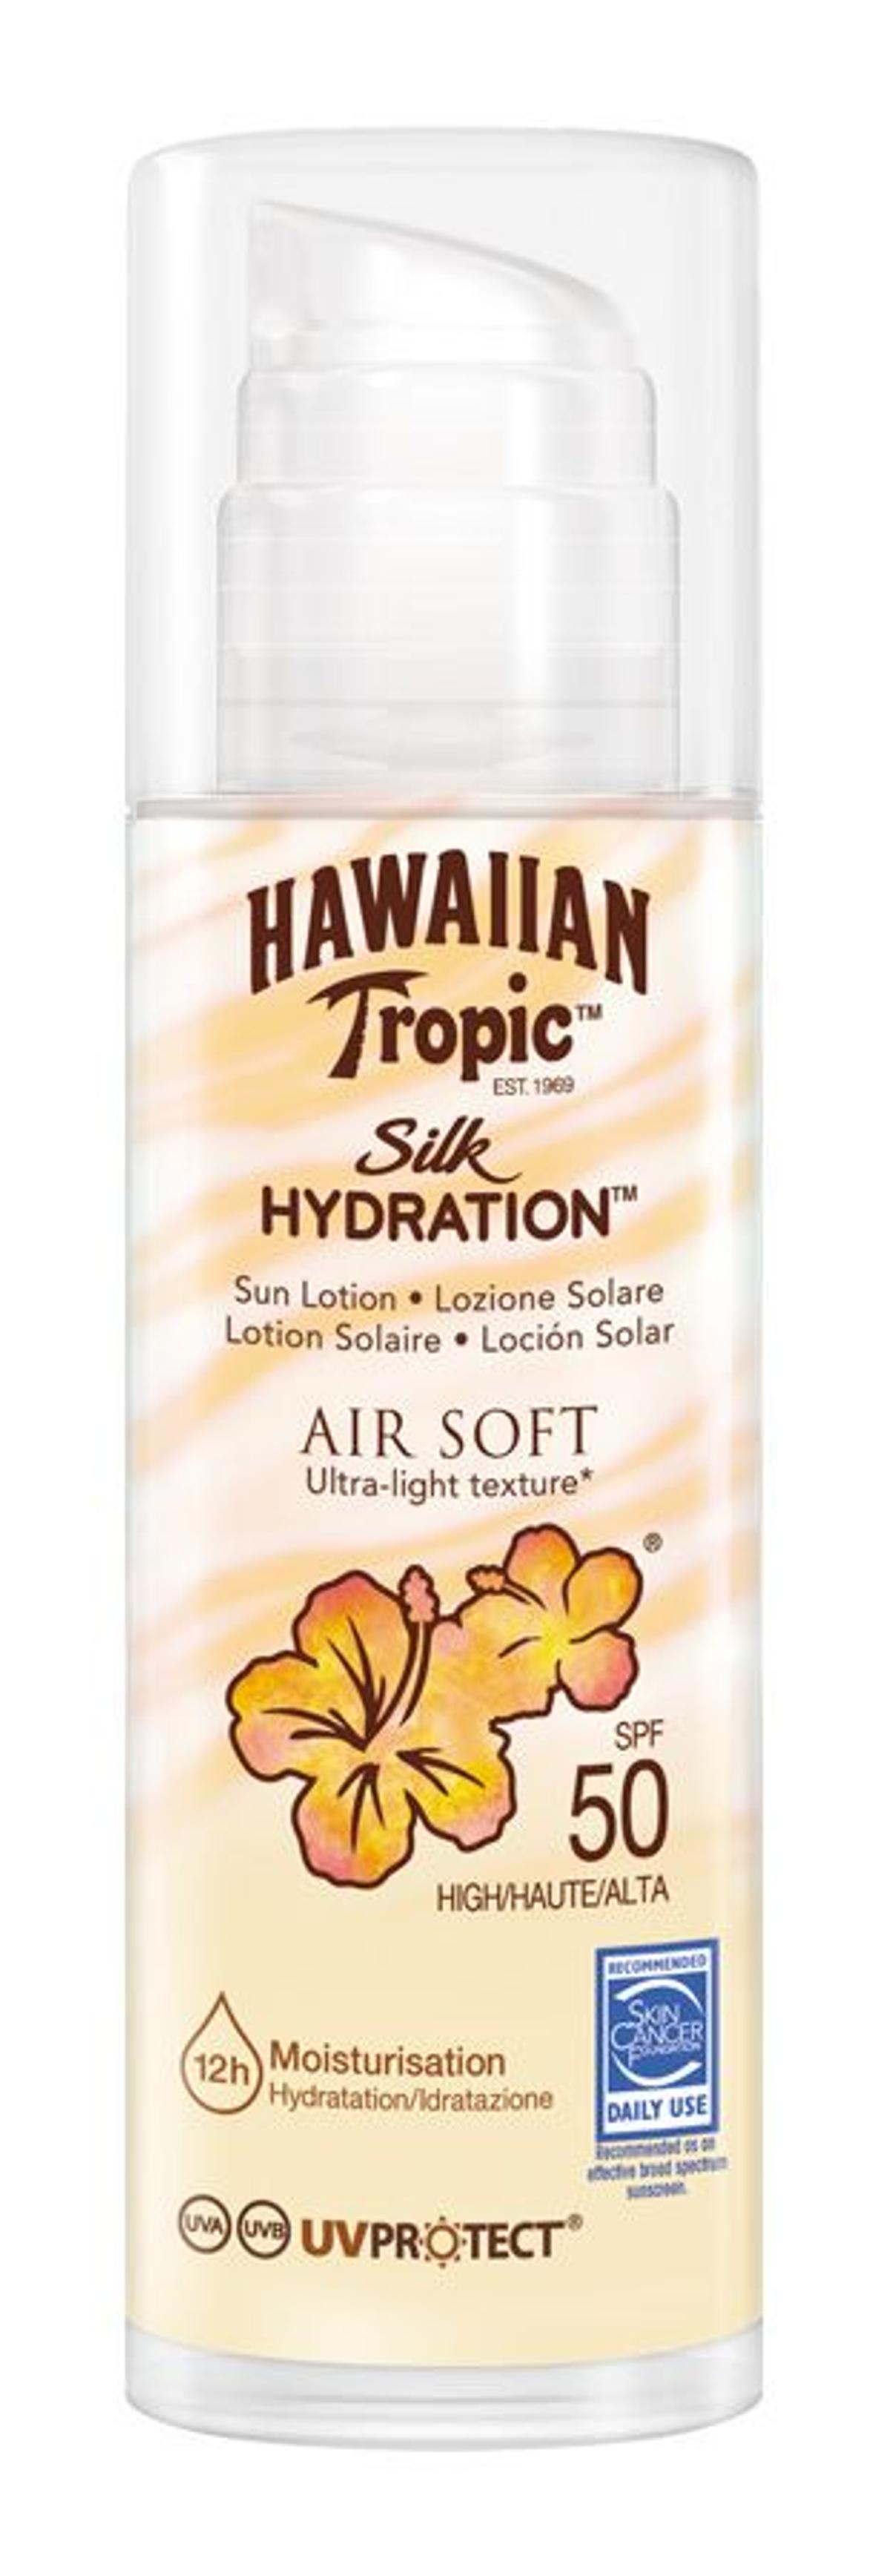 11. Silk Hydration Air Soft SPF50, de Hawaiian Tropic